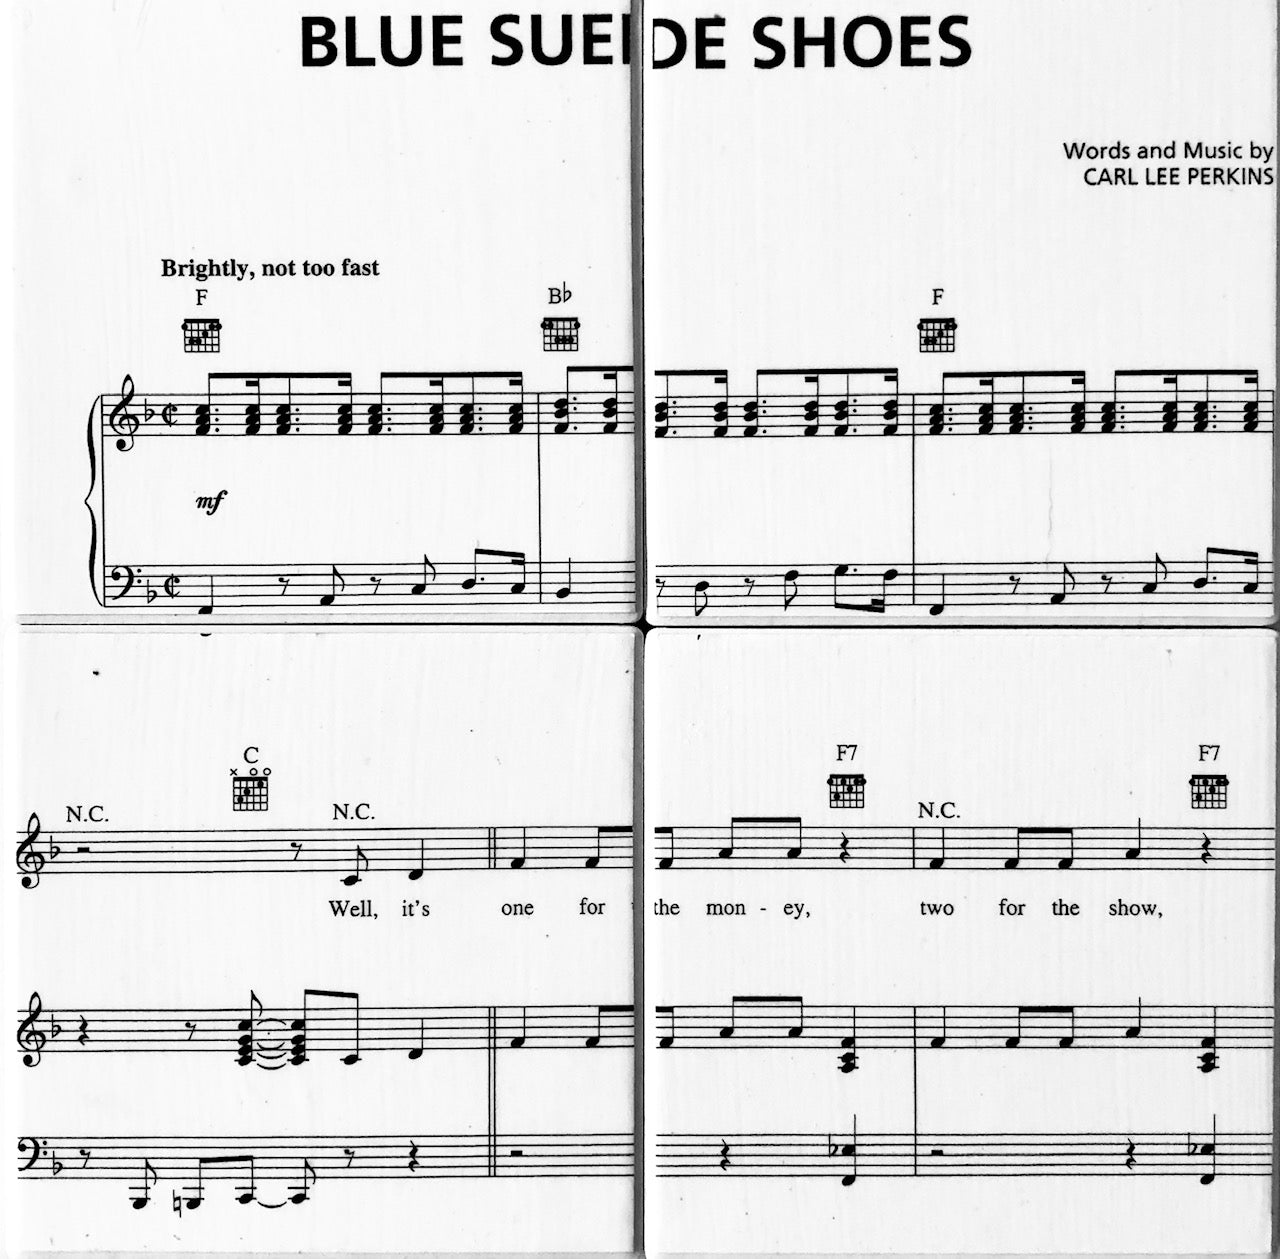 ELVIS PRESLEY - Blue Suede Shoes